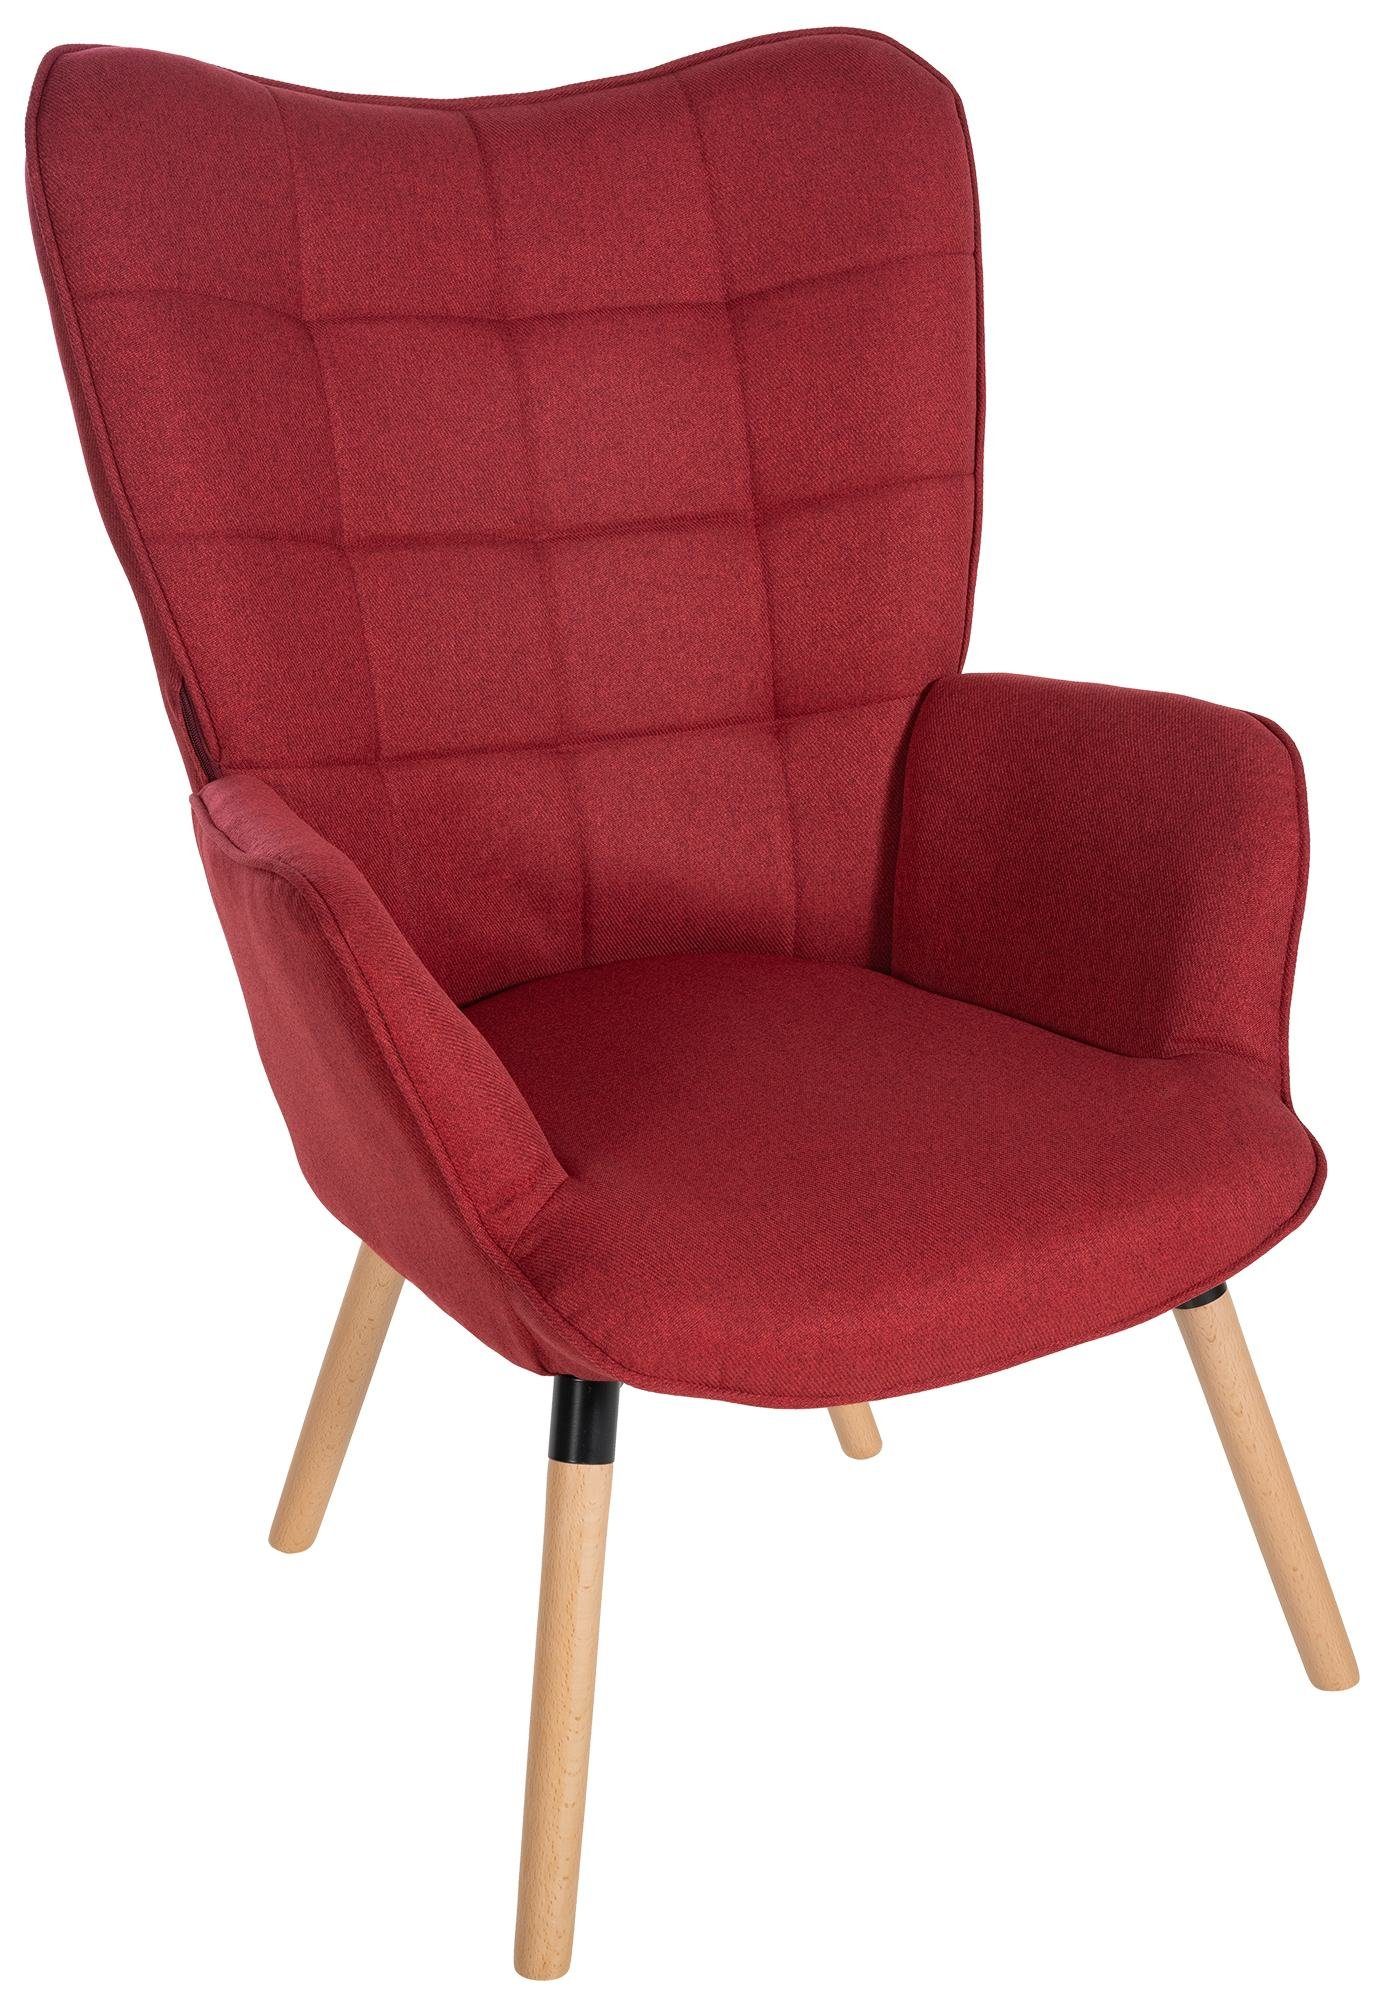 CLP Loungesessel Garding, Stuhl mit Stoff-Bezug und Gestell aus Buchenholz rot | Loungesessel